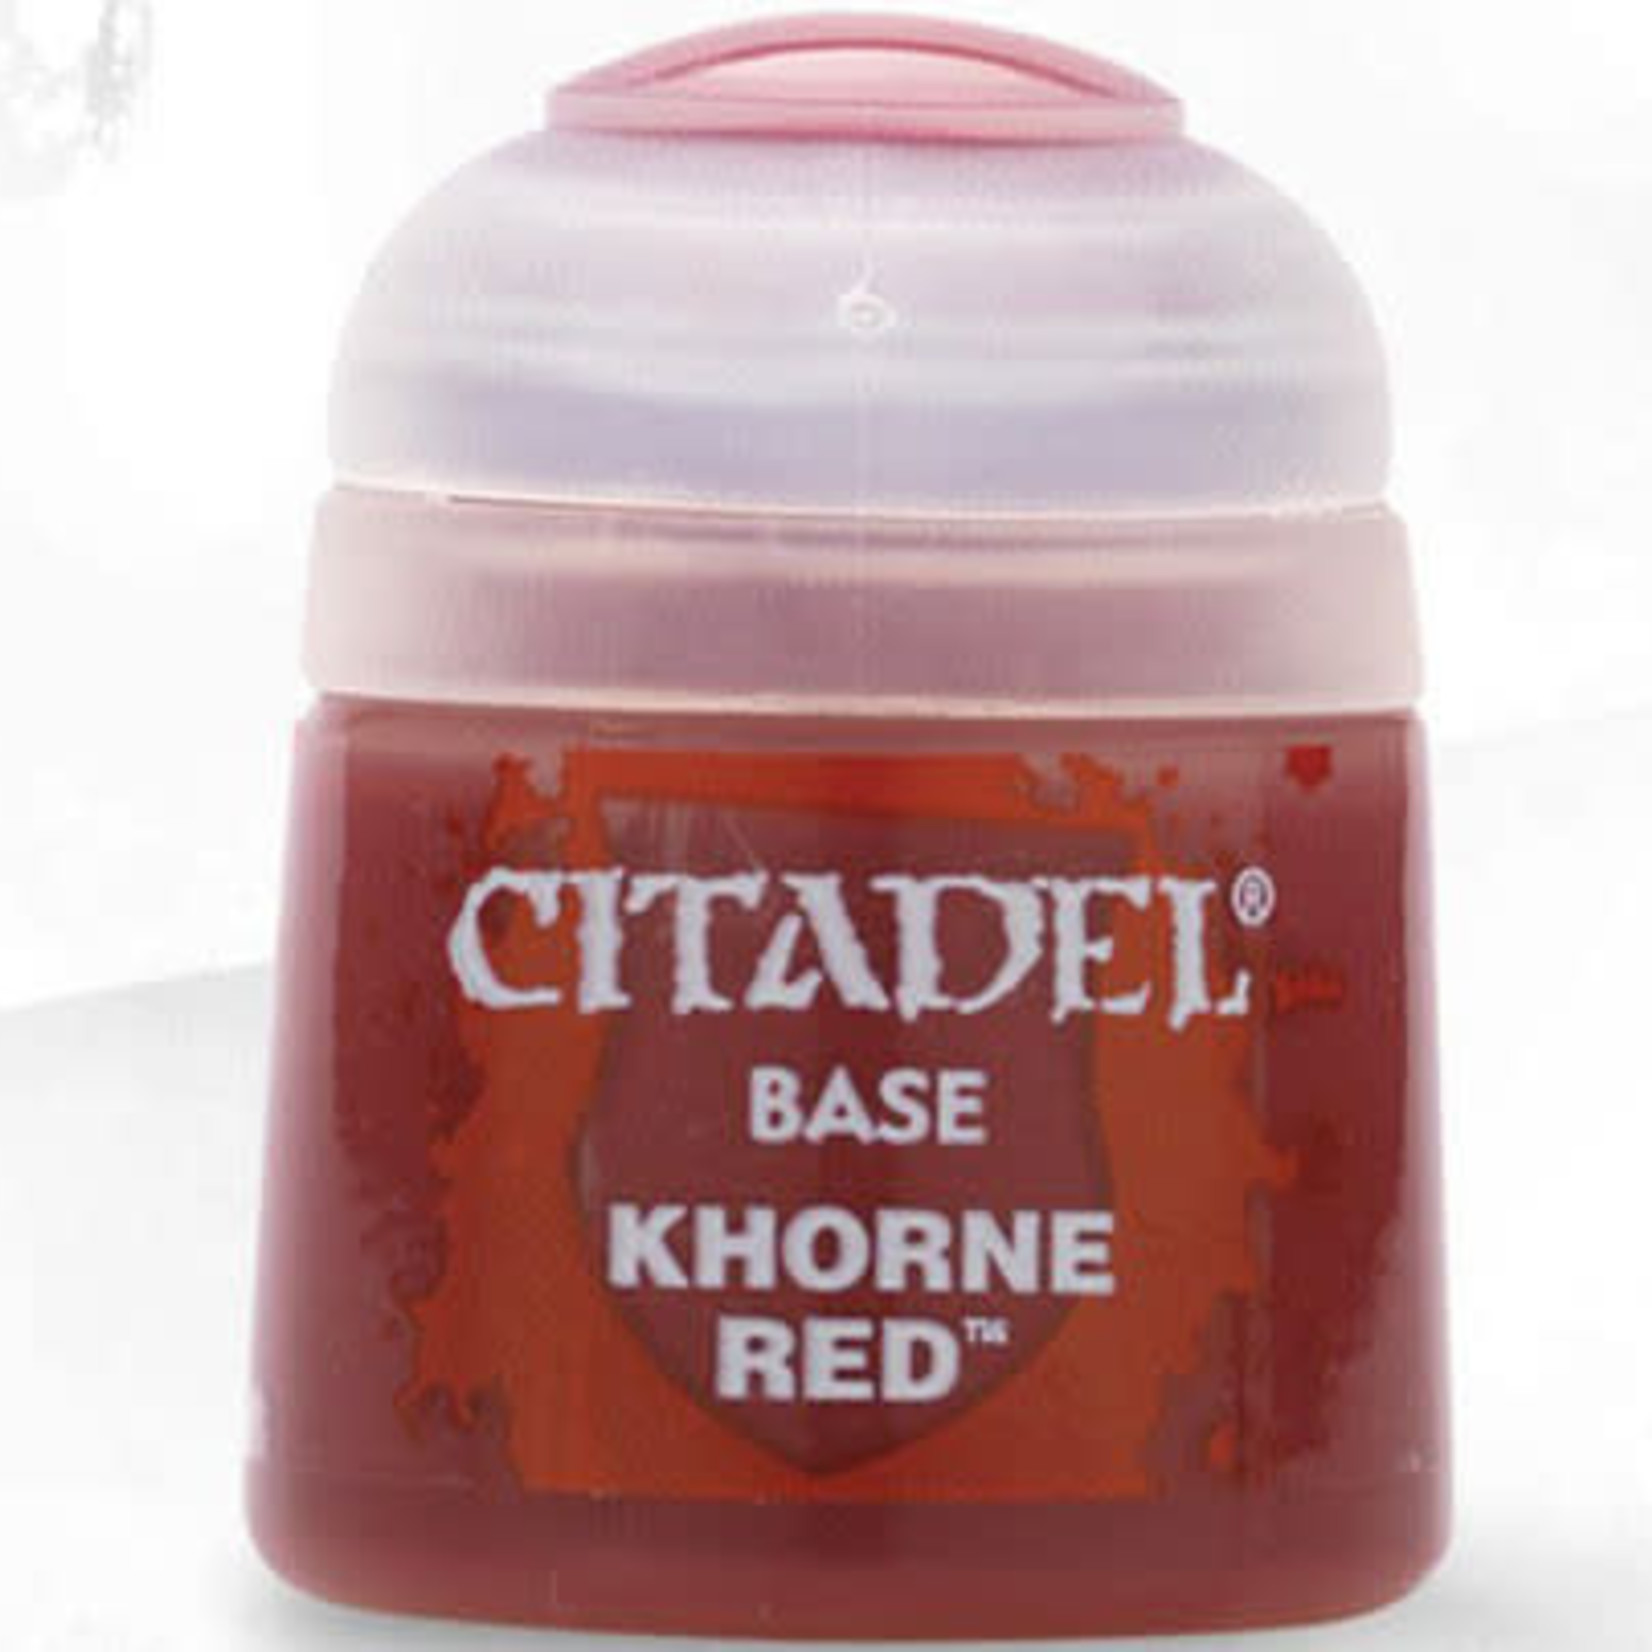 Citadel Citadel Paint - Base: Khorne Red